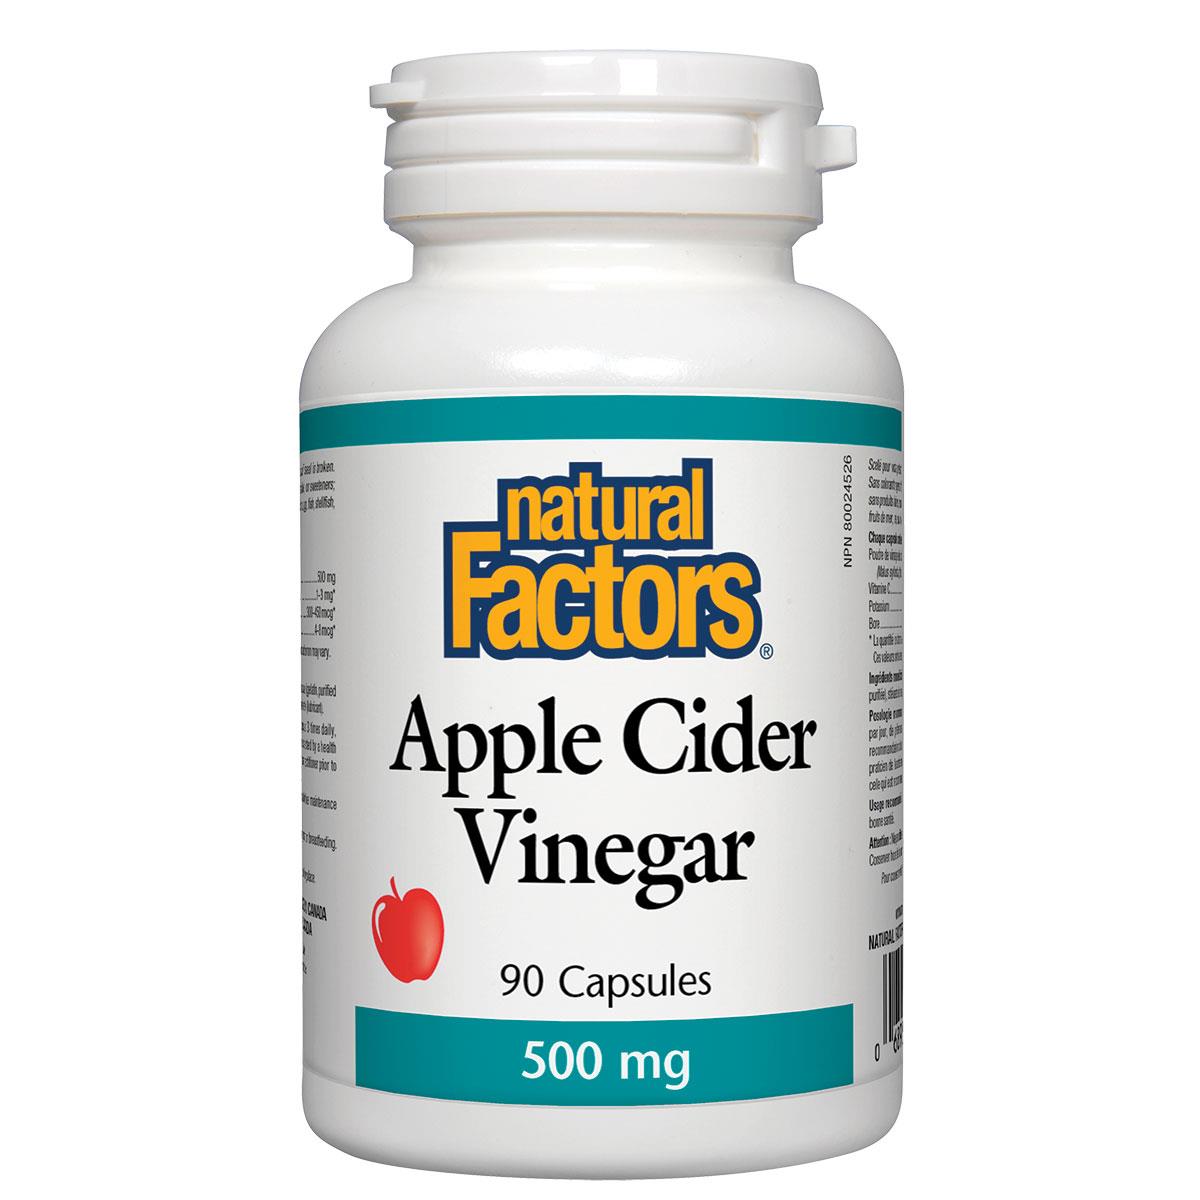 Apple Cider Vinegar 500mg/90 Caps
Apple Cider Vinegar, 500mg / 90Caps